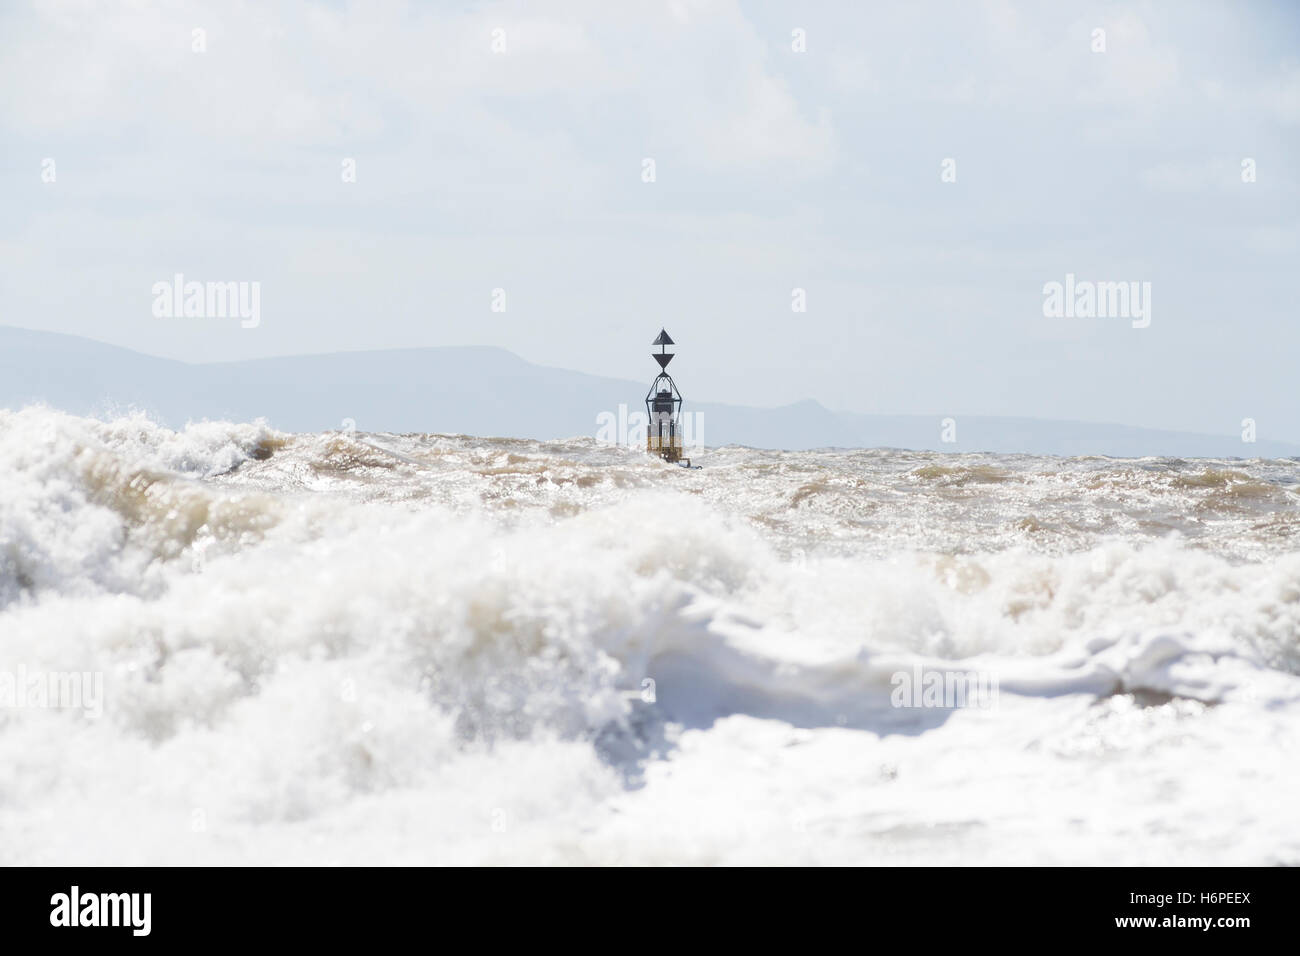 cardinal marker buoy in stormy seas Stock Photo